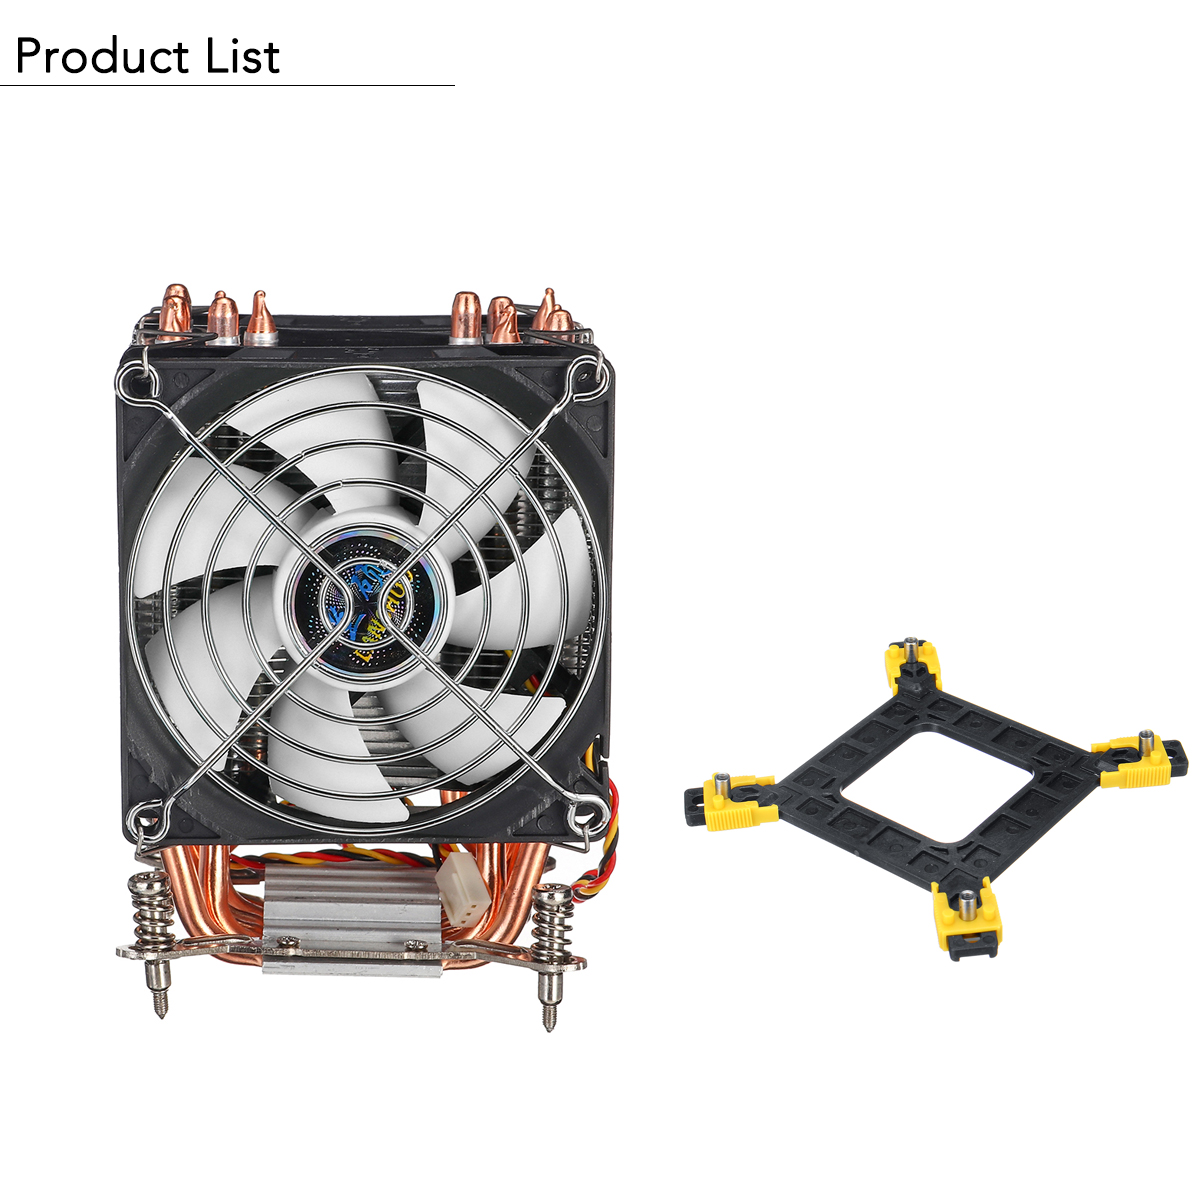 3 Pin 90cm Double Cooling Fan 6 Heat Pipes Cooler Heatsink for 115X 1366 Motherboard 17